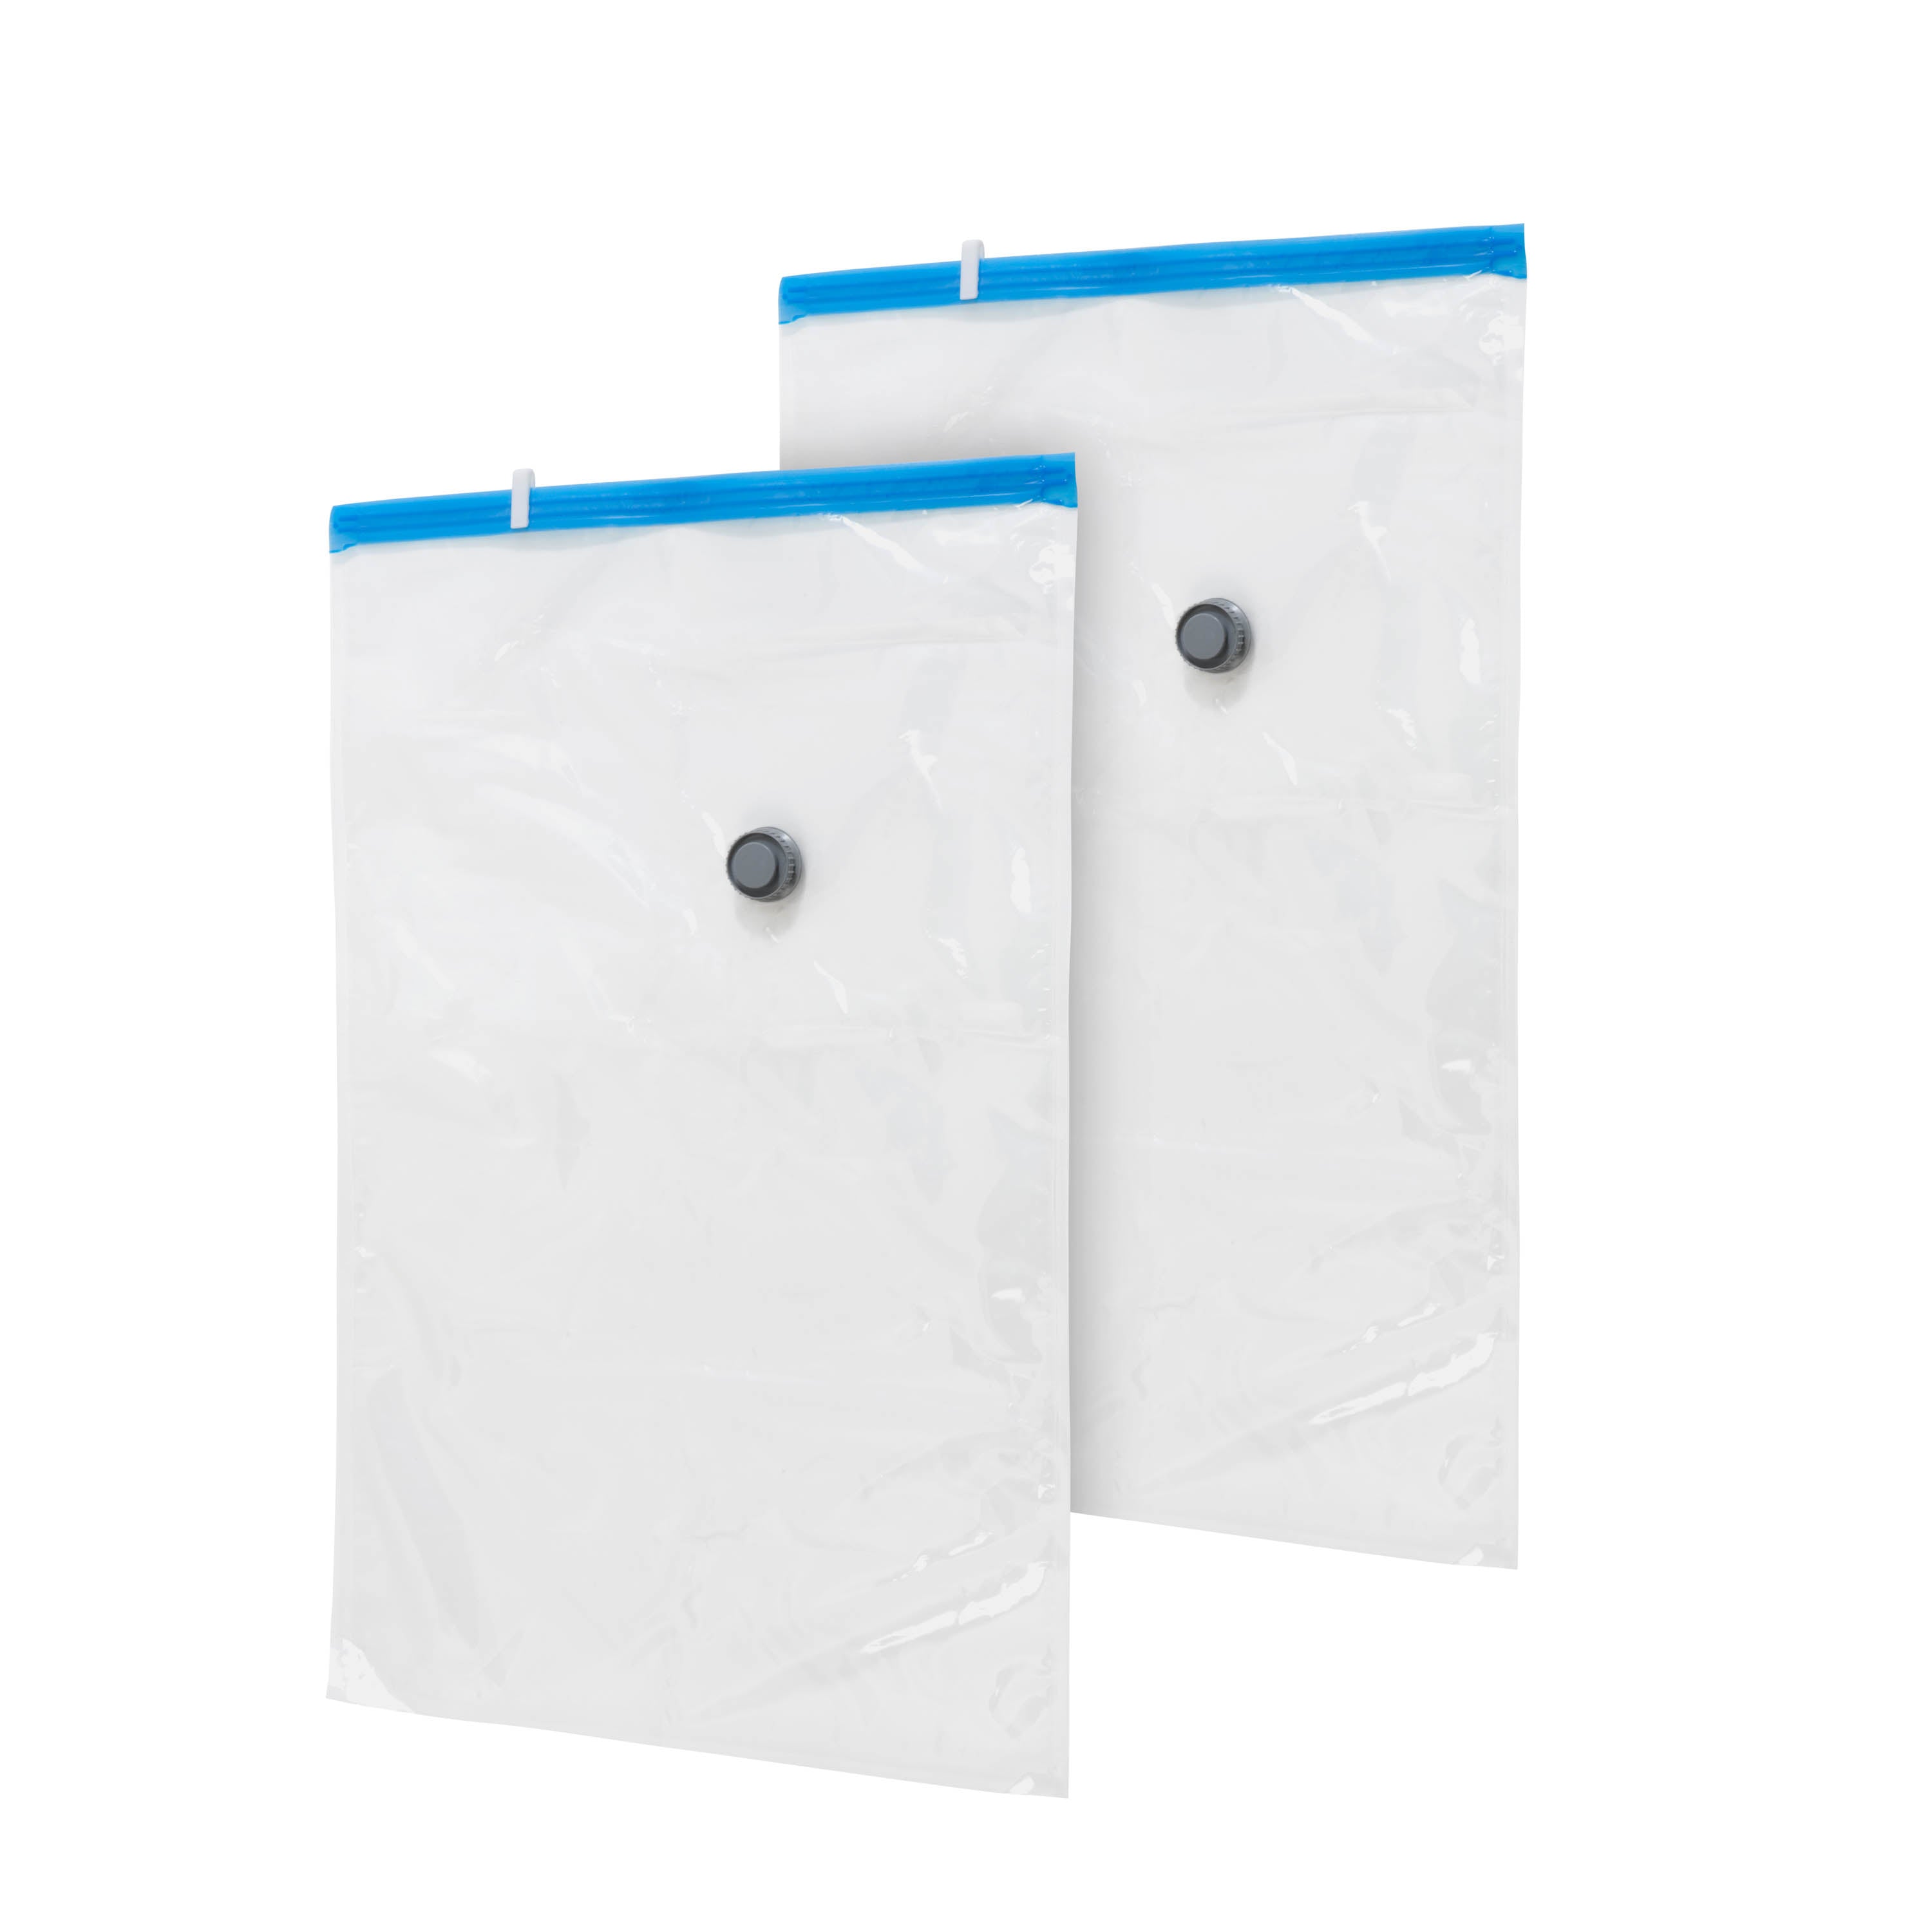 Clear XL Vacuum Space Saving Storage Bags (2-Pack)